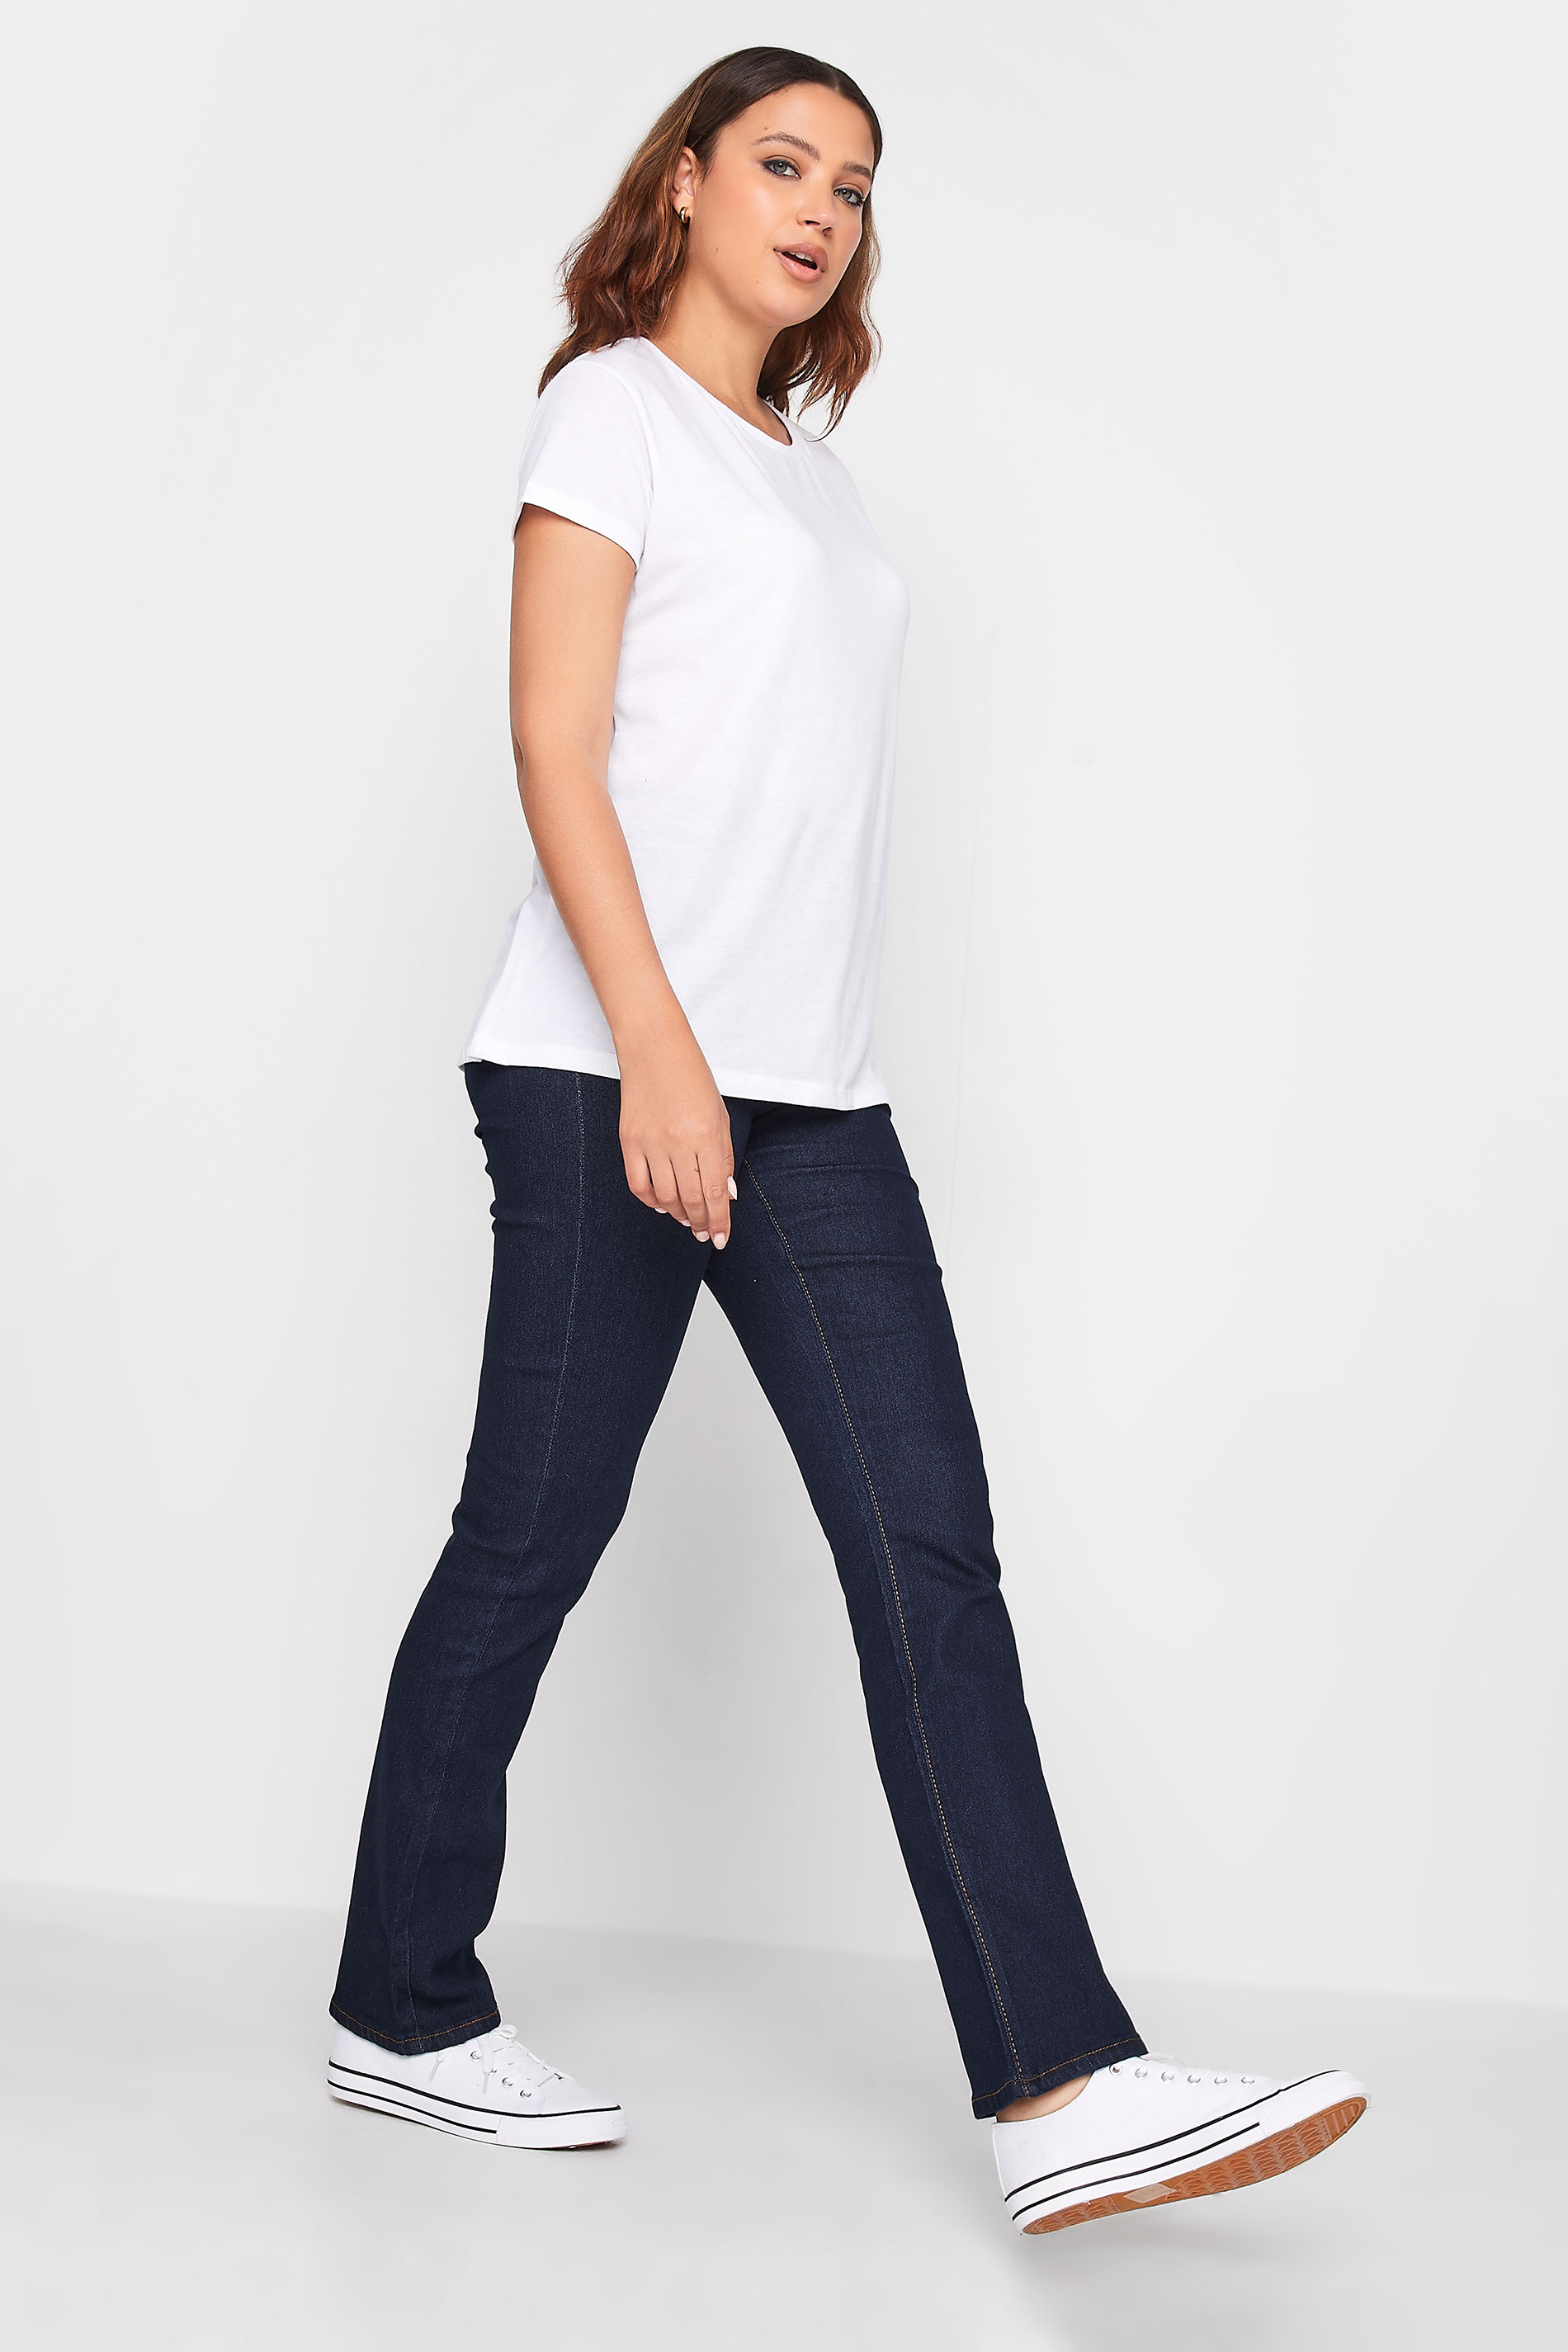 LTS Tall Women's Indigo Blue Straight Leg Jeans | Long Tall Sally  3